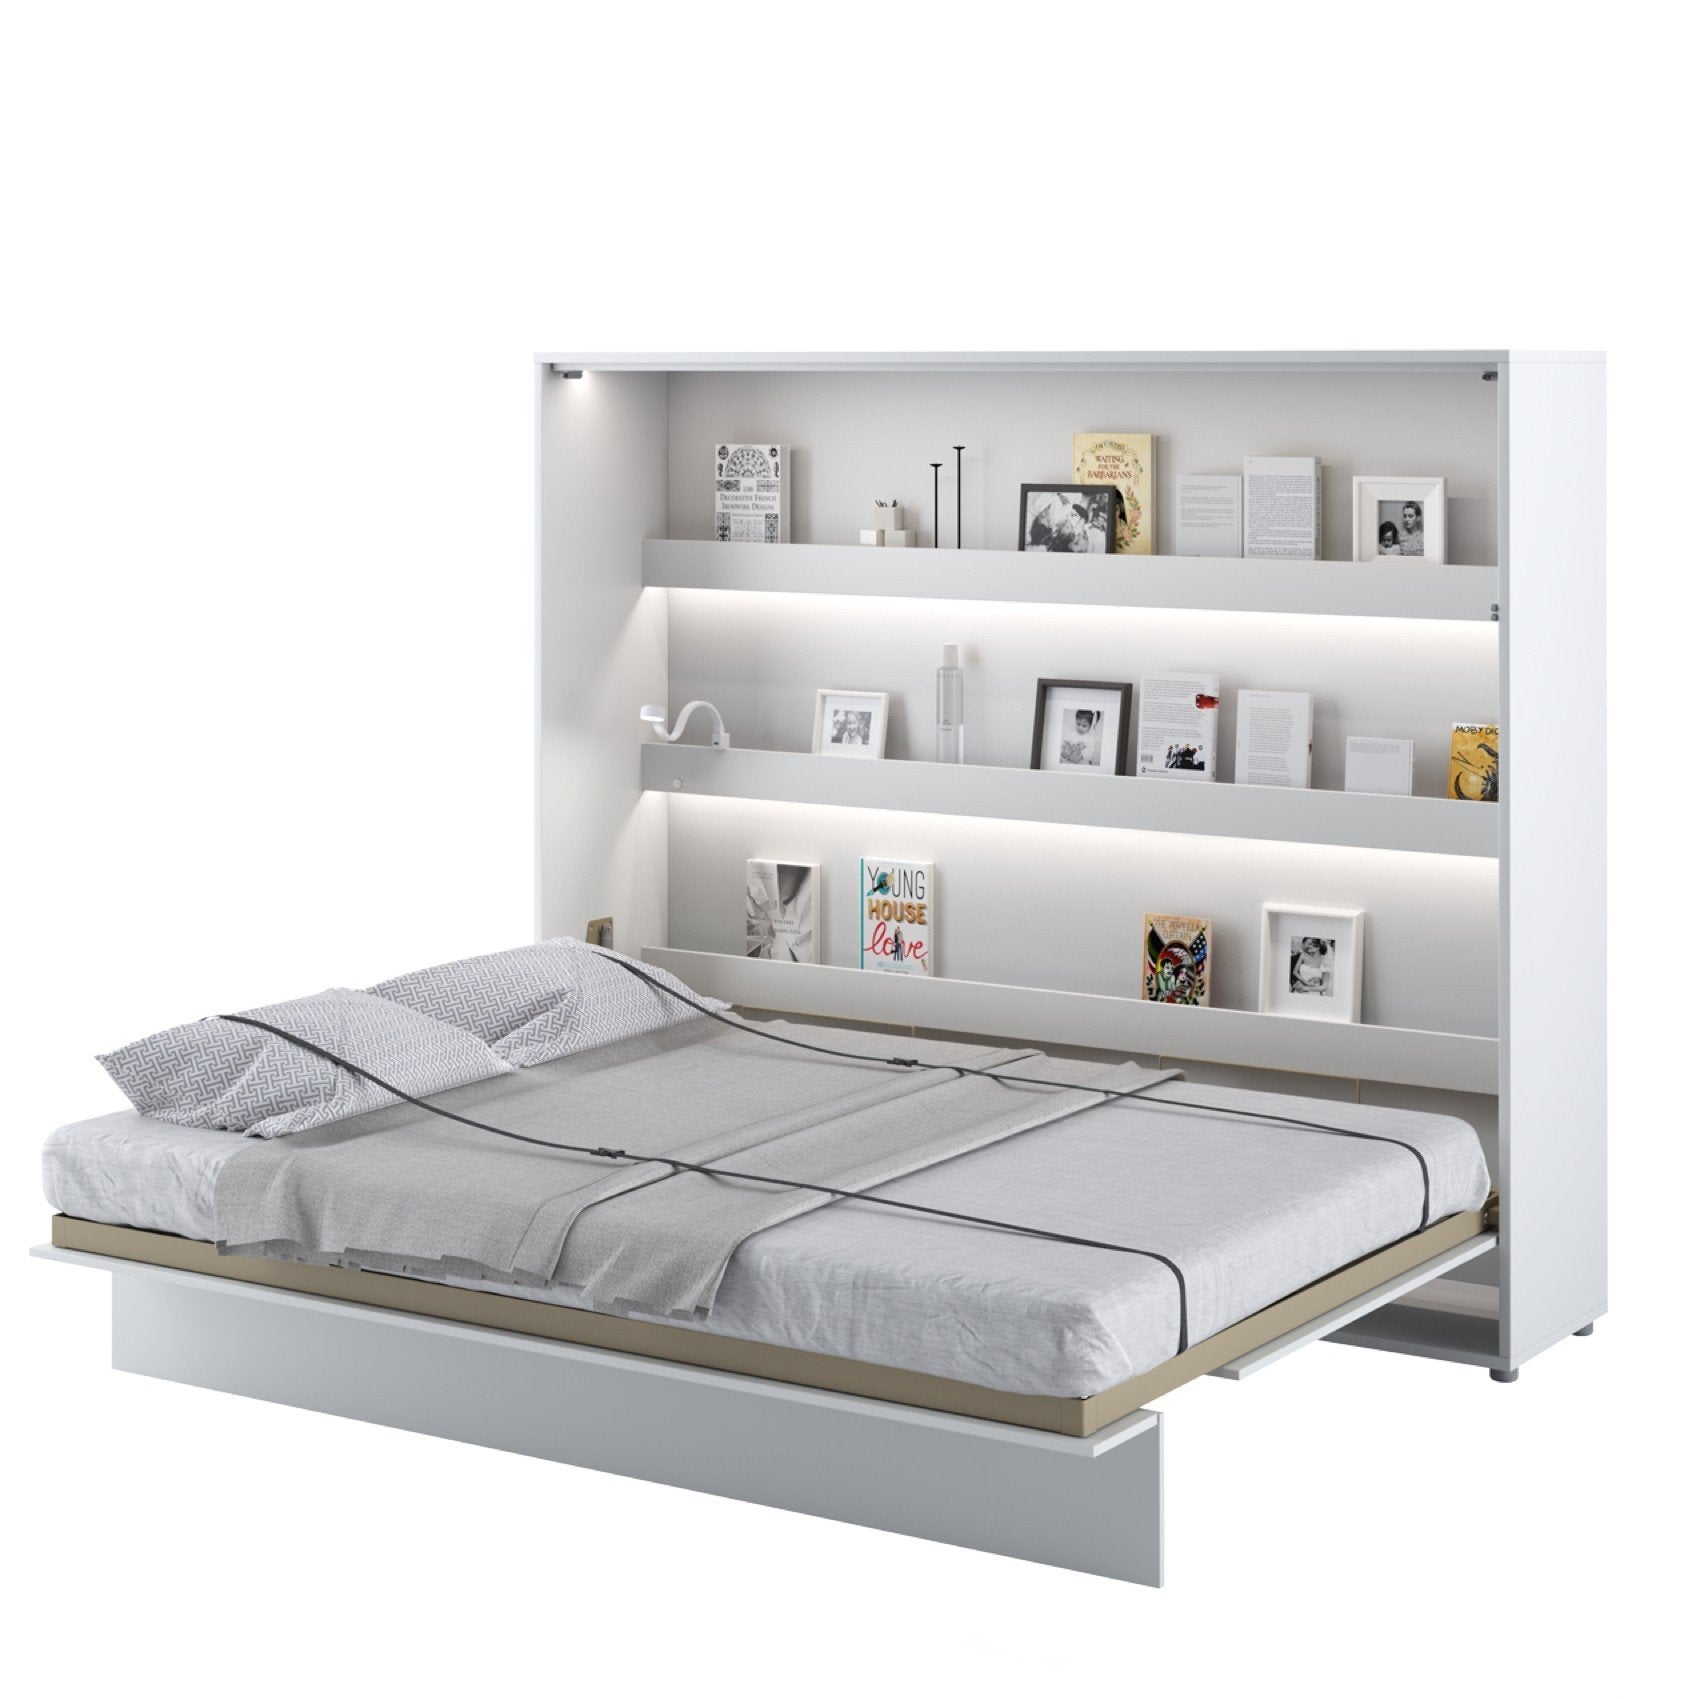 View BC14 Horizontal Wall Bed Concept 160cm Murphy Bed White Matt 160 x 200cm information